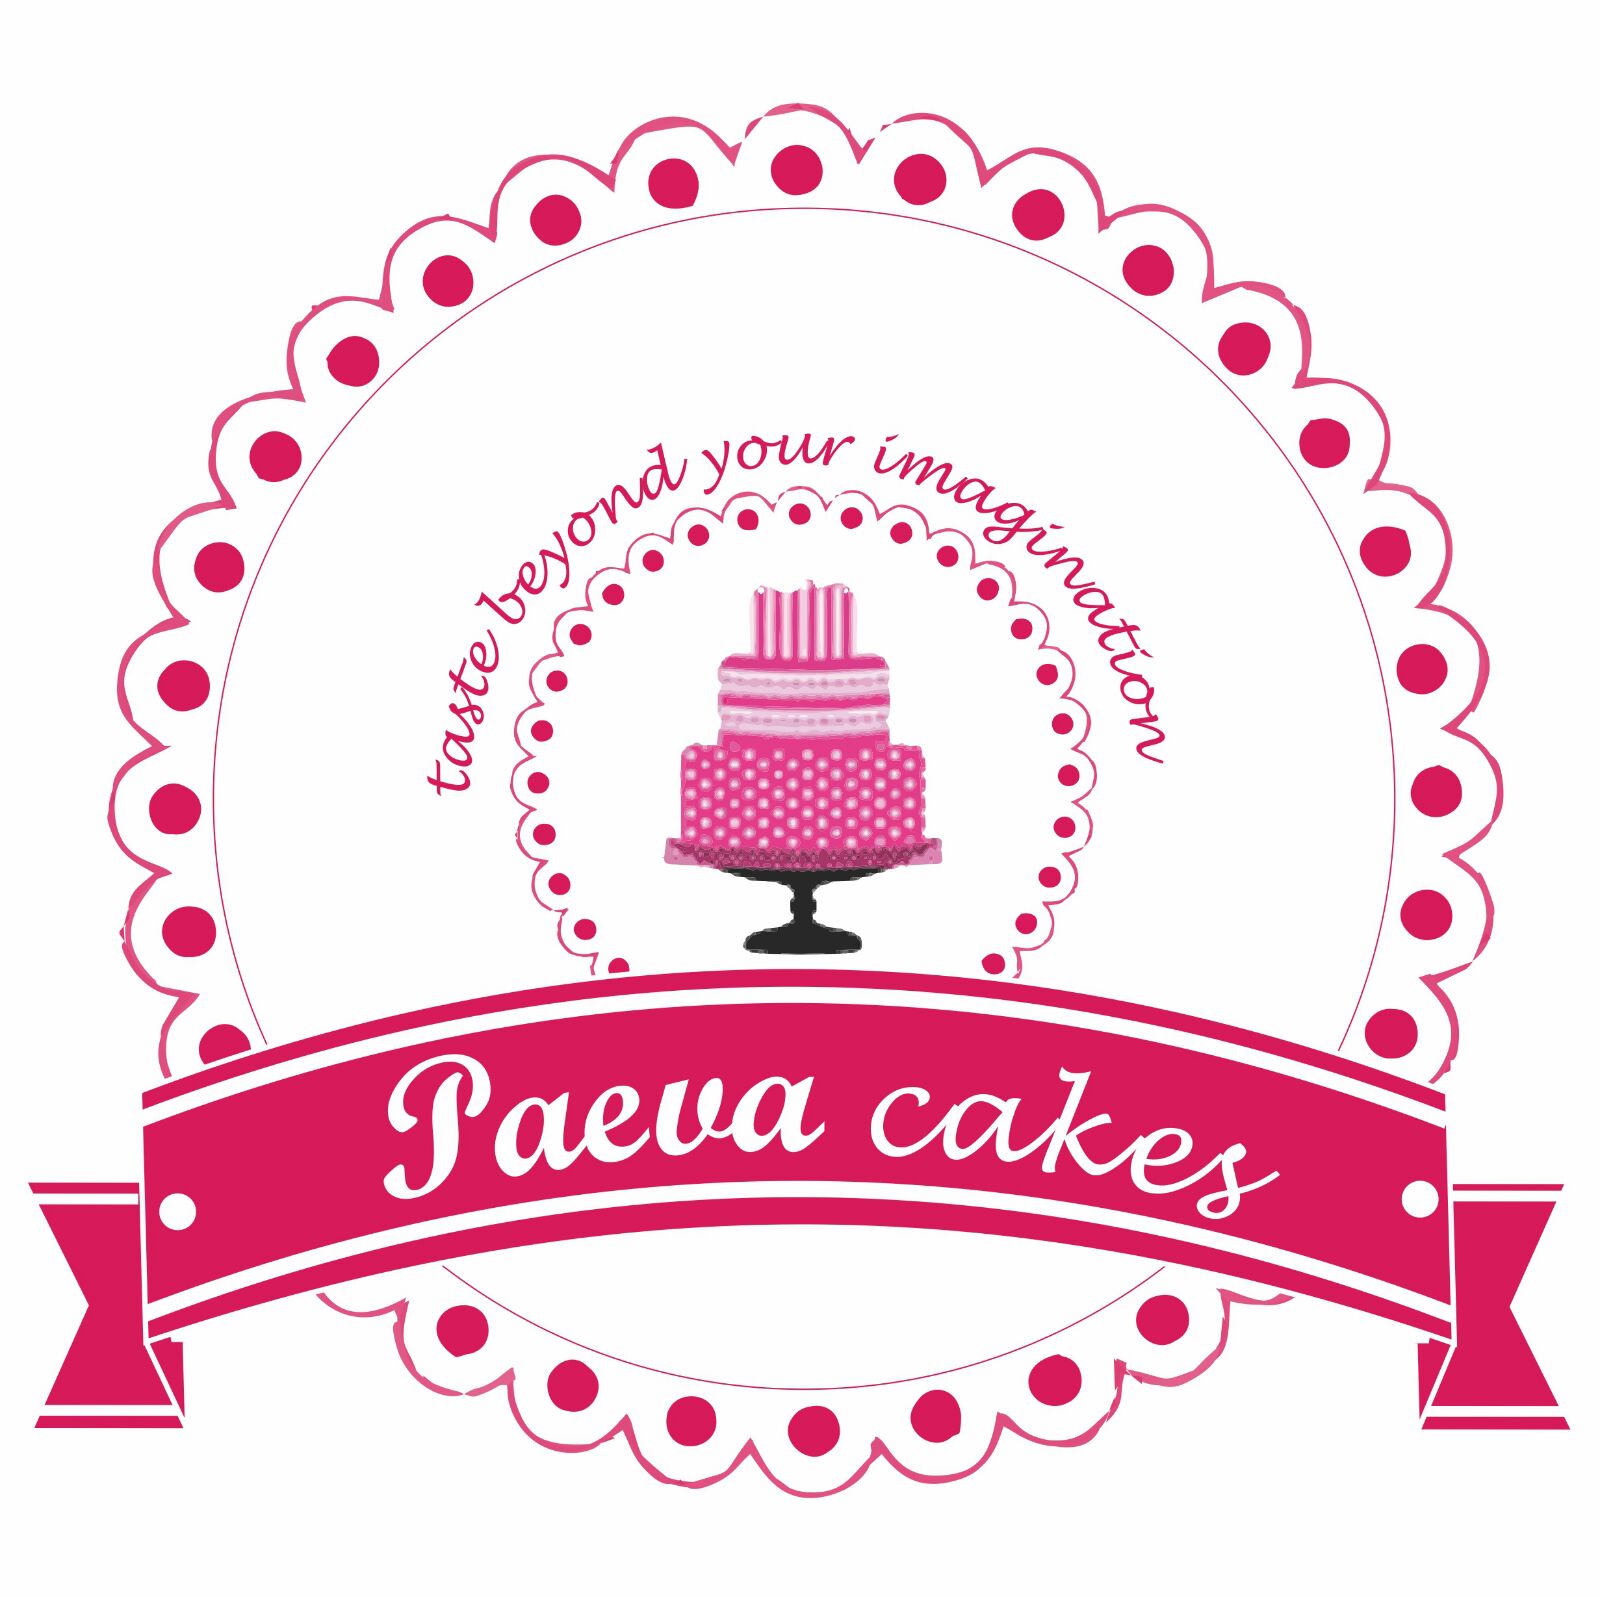 Paeva Cakes